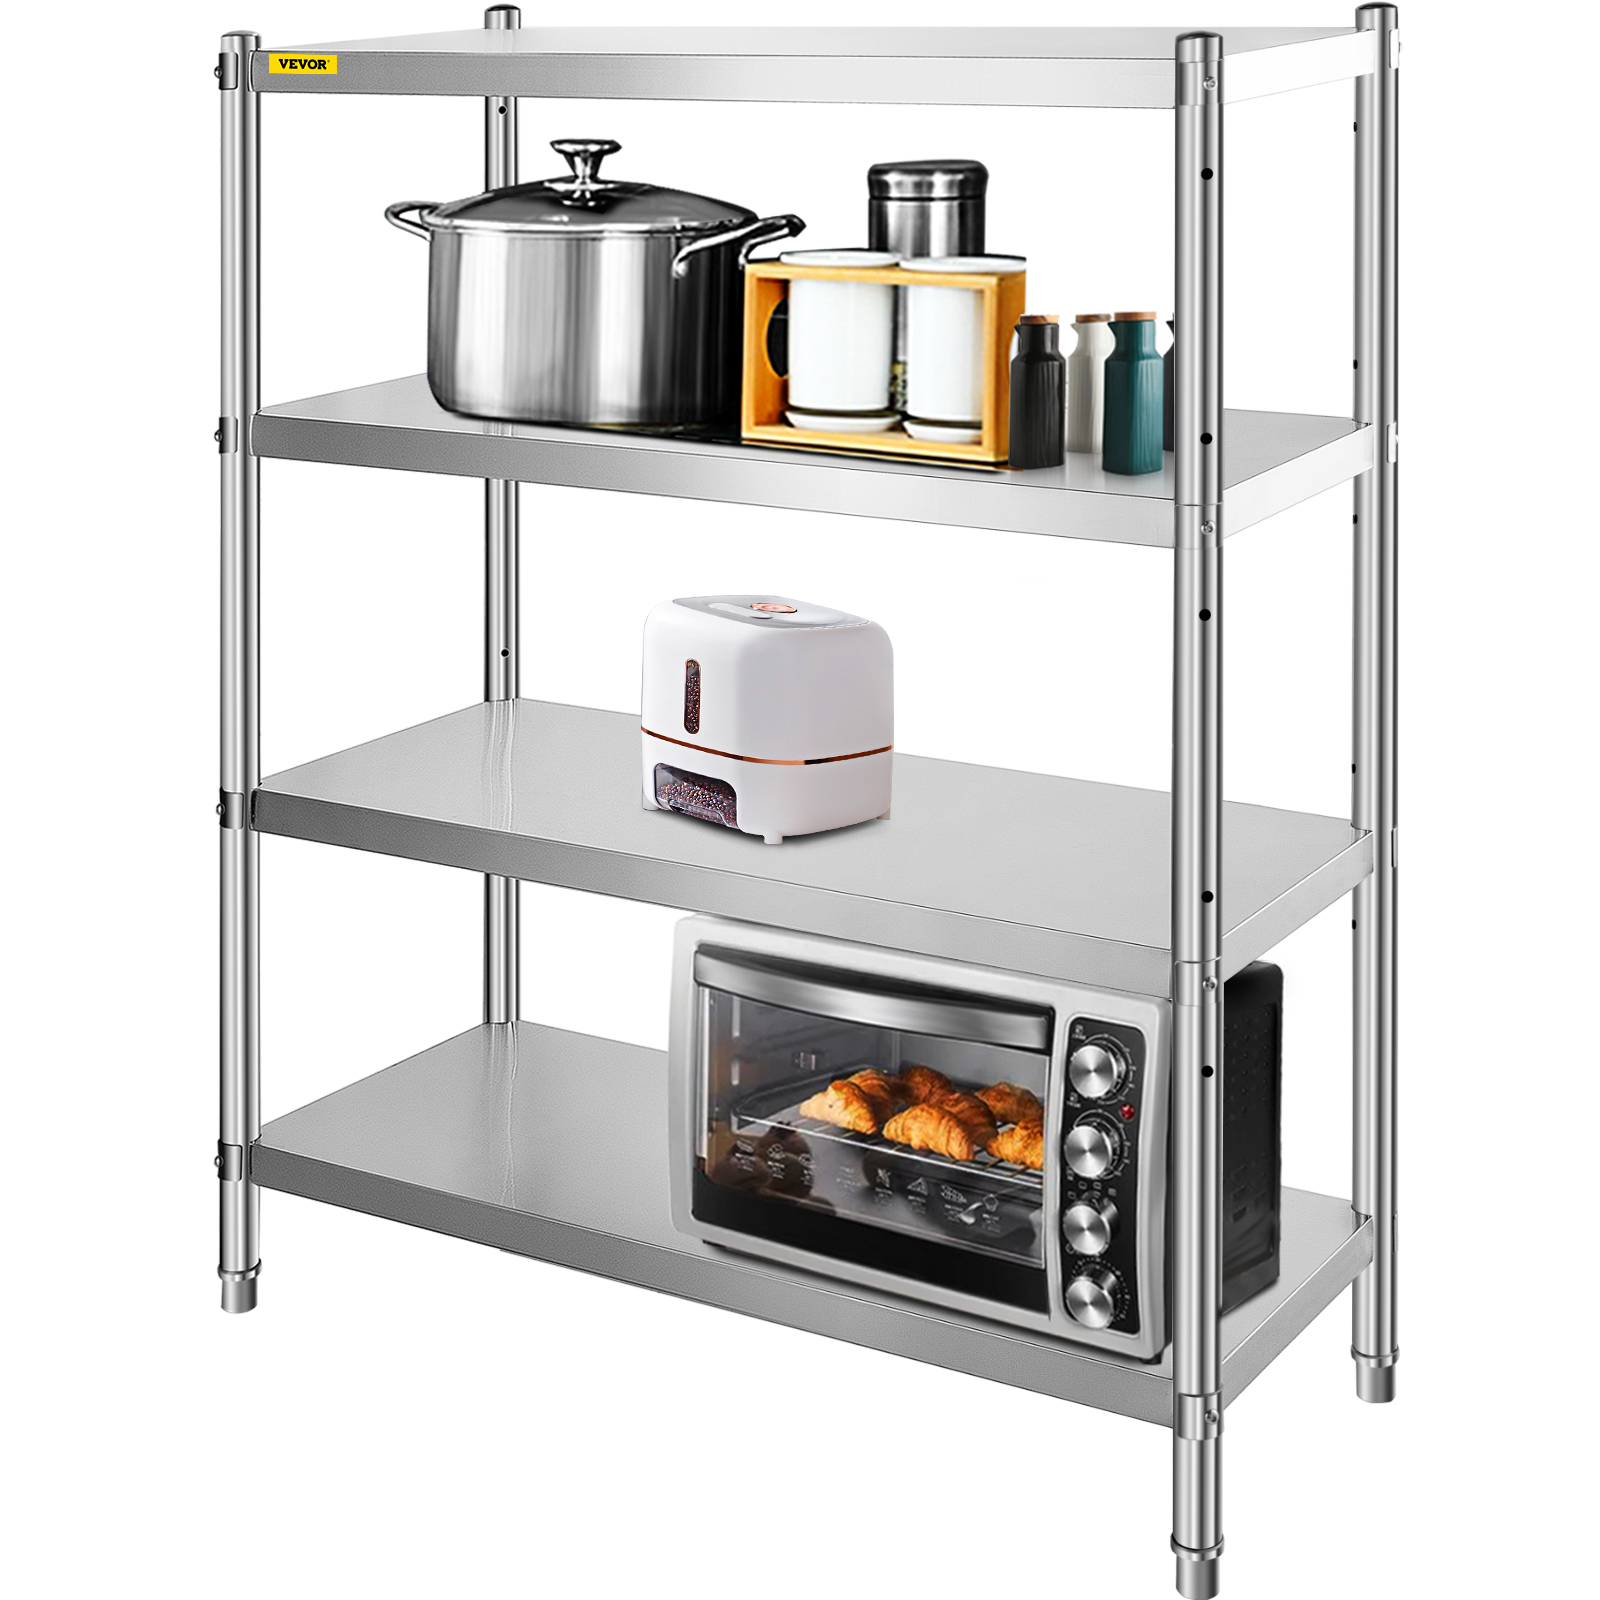 Stainless Steel Shelving Units Storage Shelf 4 Tier Kitchen Commercial Storage от Vevor Many GEOs